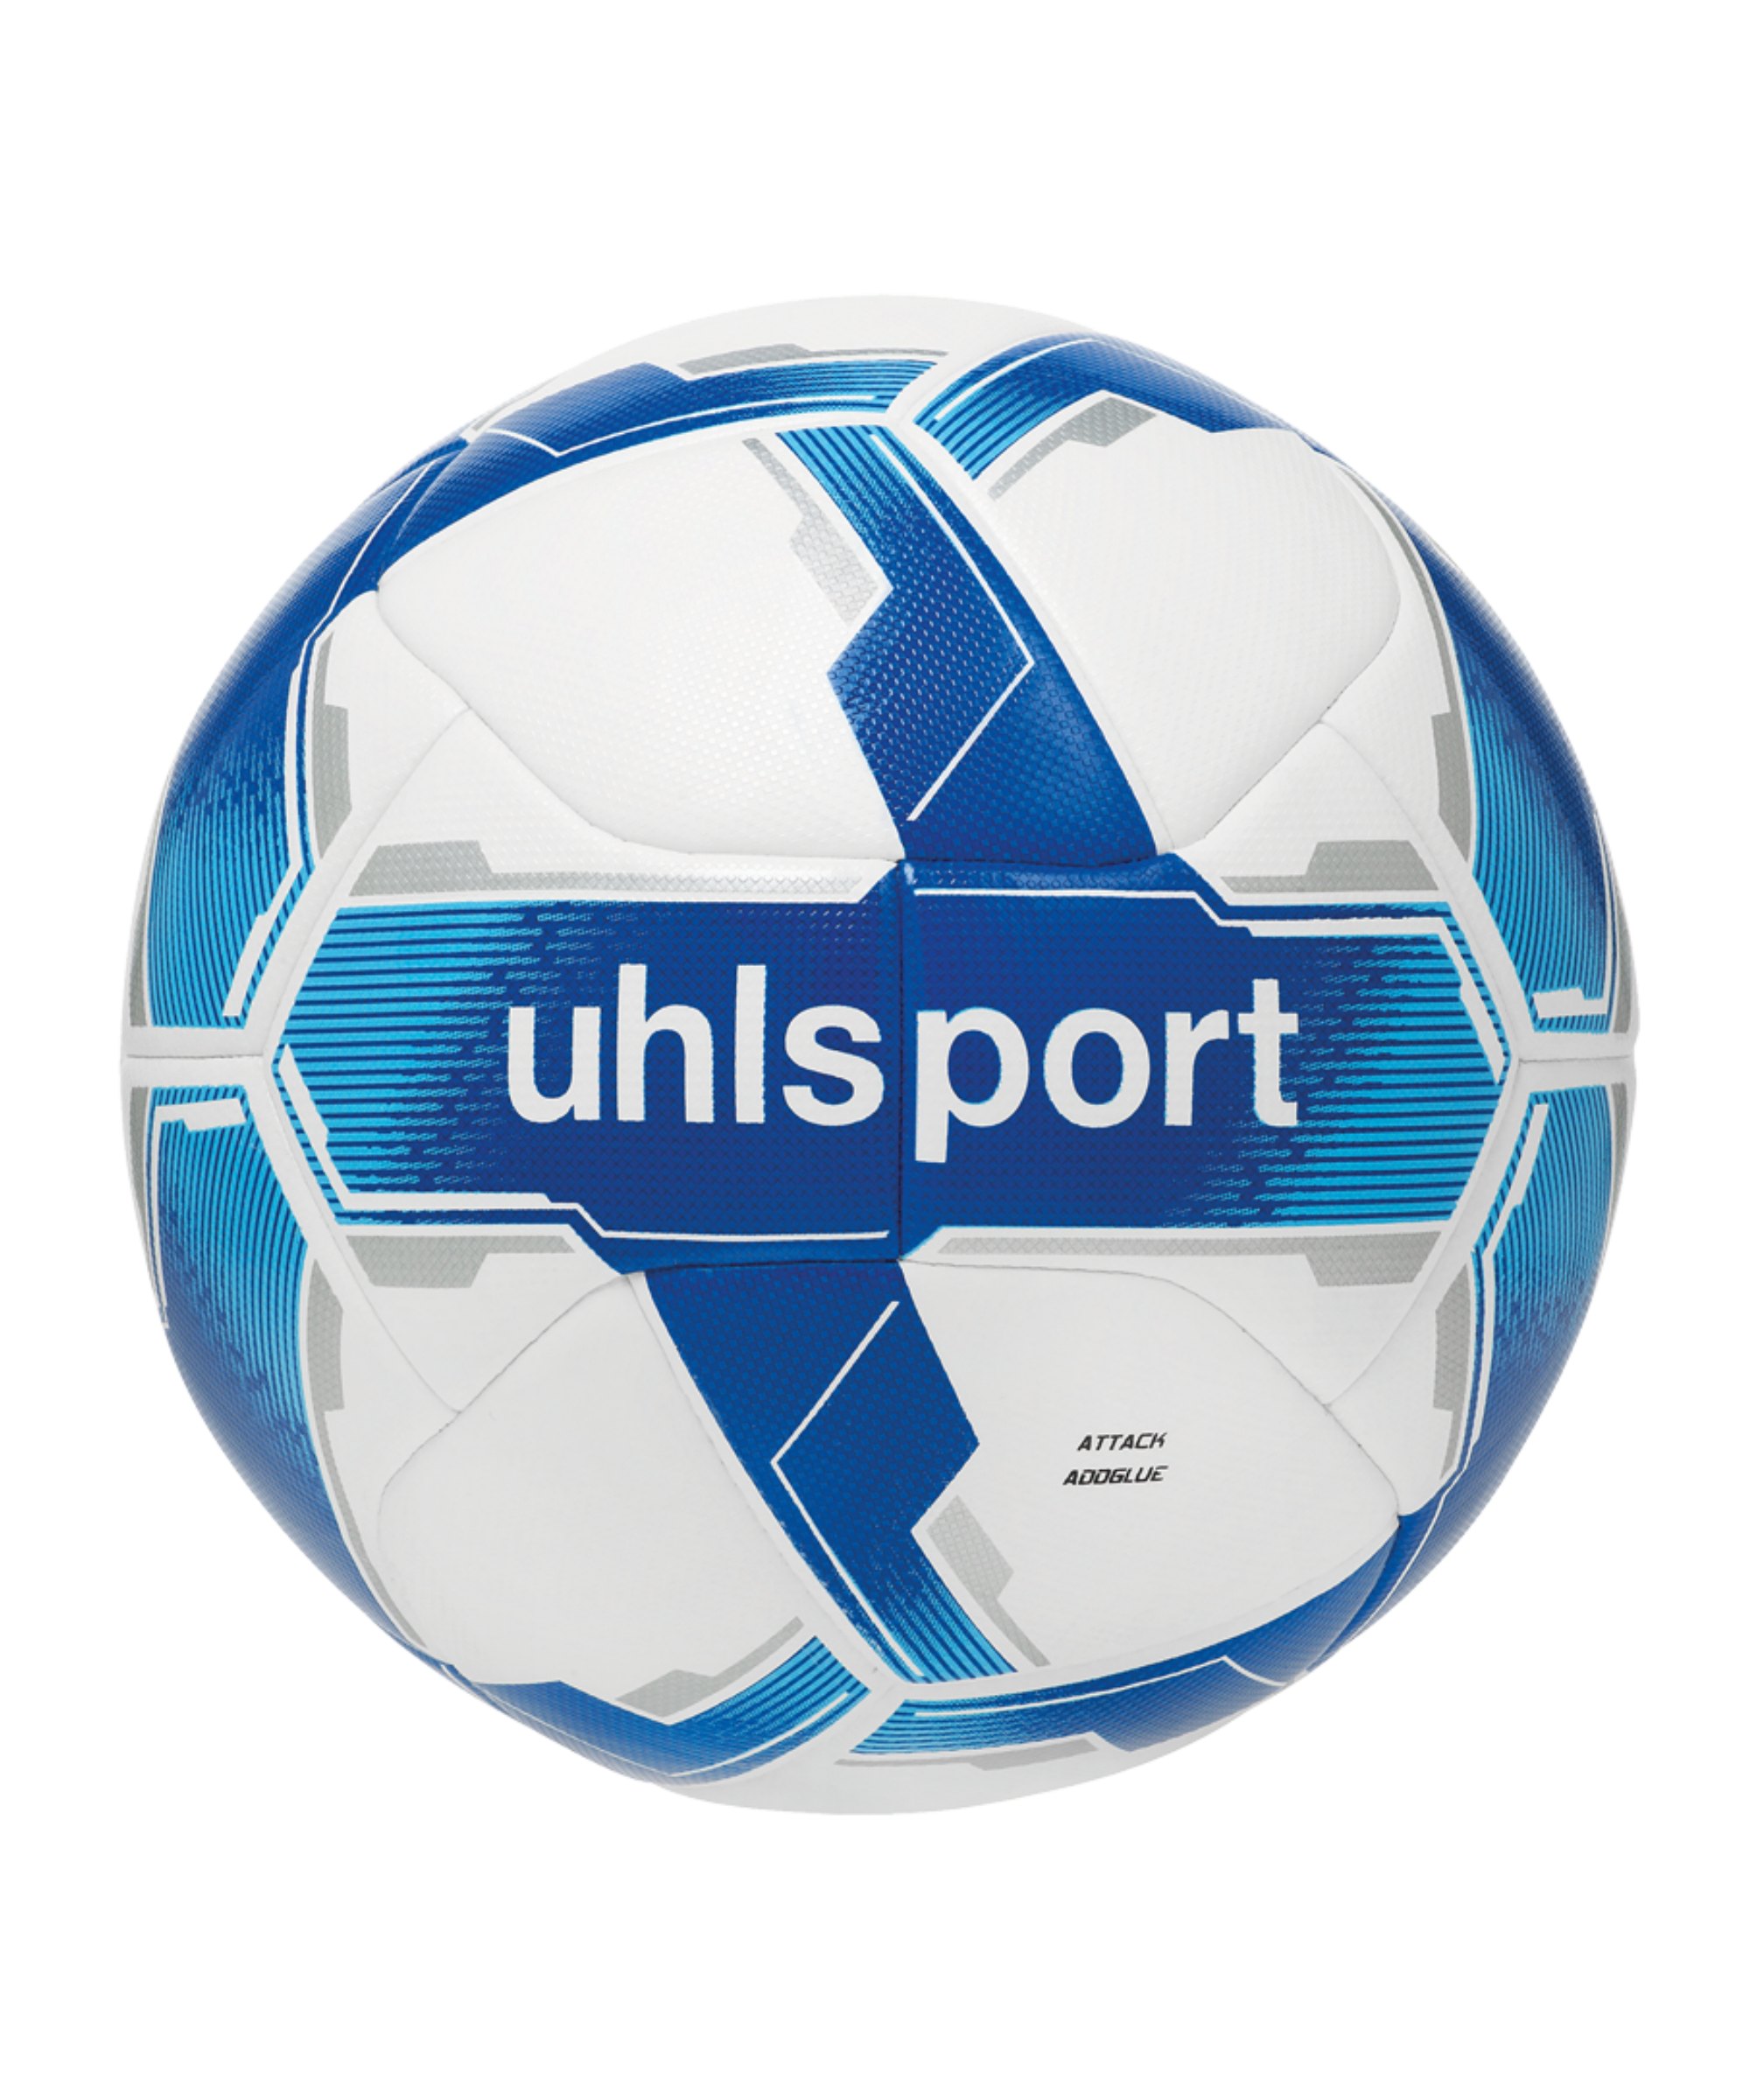 Uhlsport Attack Addglue Trainingsball Weiss F01 - weiss